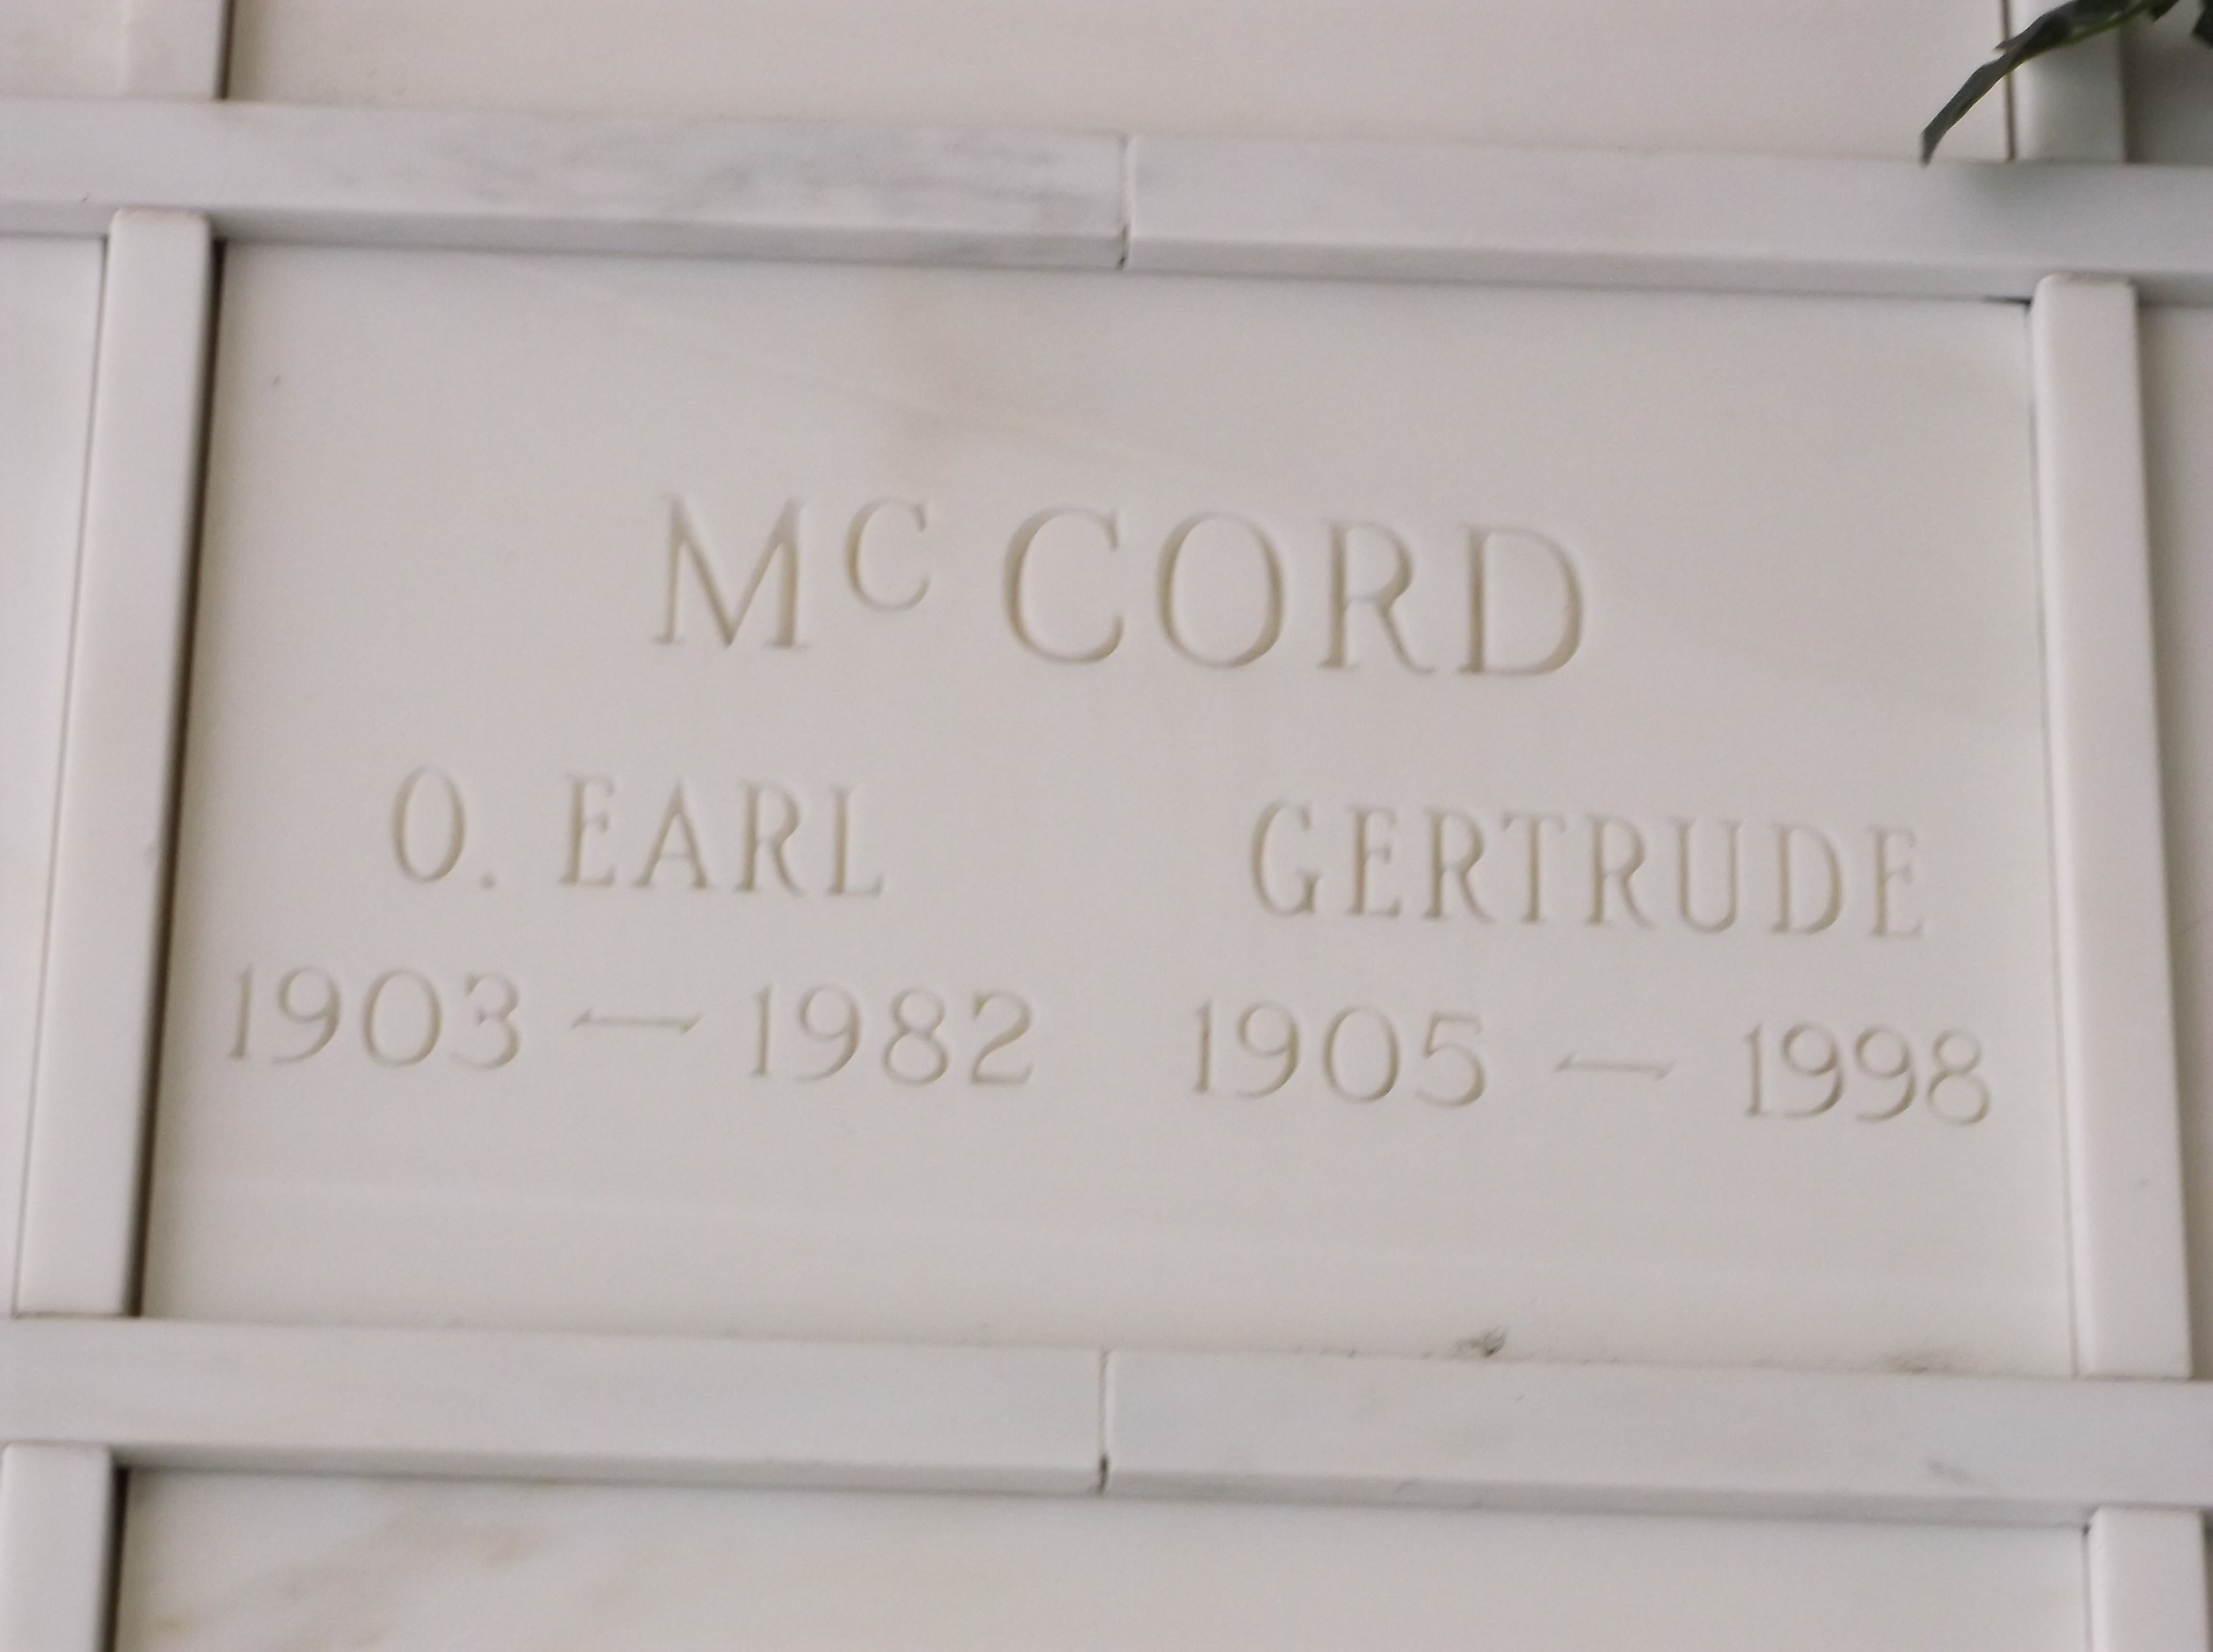 Gertrude McCord